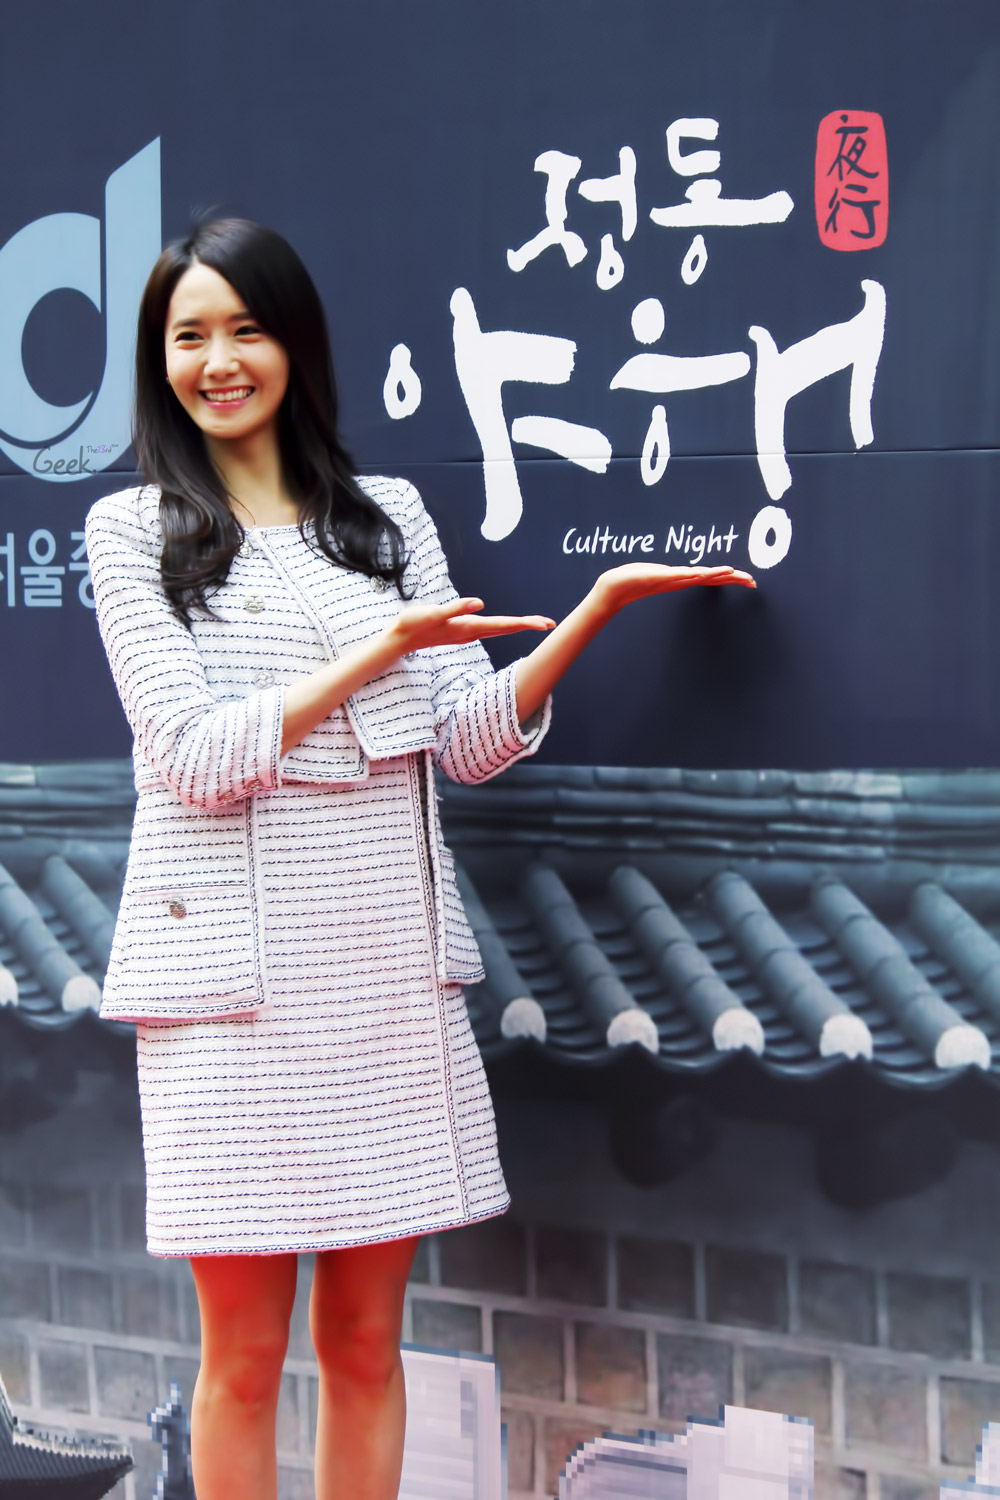 [PIC][29-05-2015]YoonA tham dự "Jung-gu Culture Night Festival" tại Deoksugung vào chiều nay - Page 3 216FE245556D546F091C80